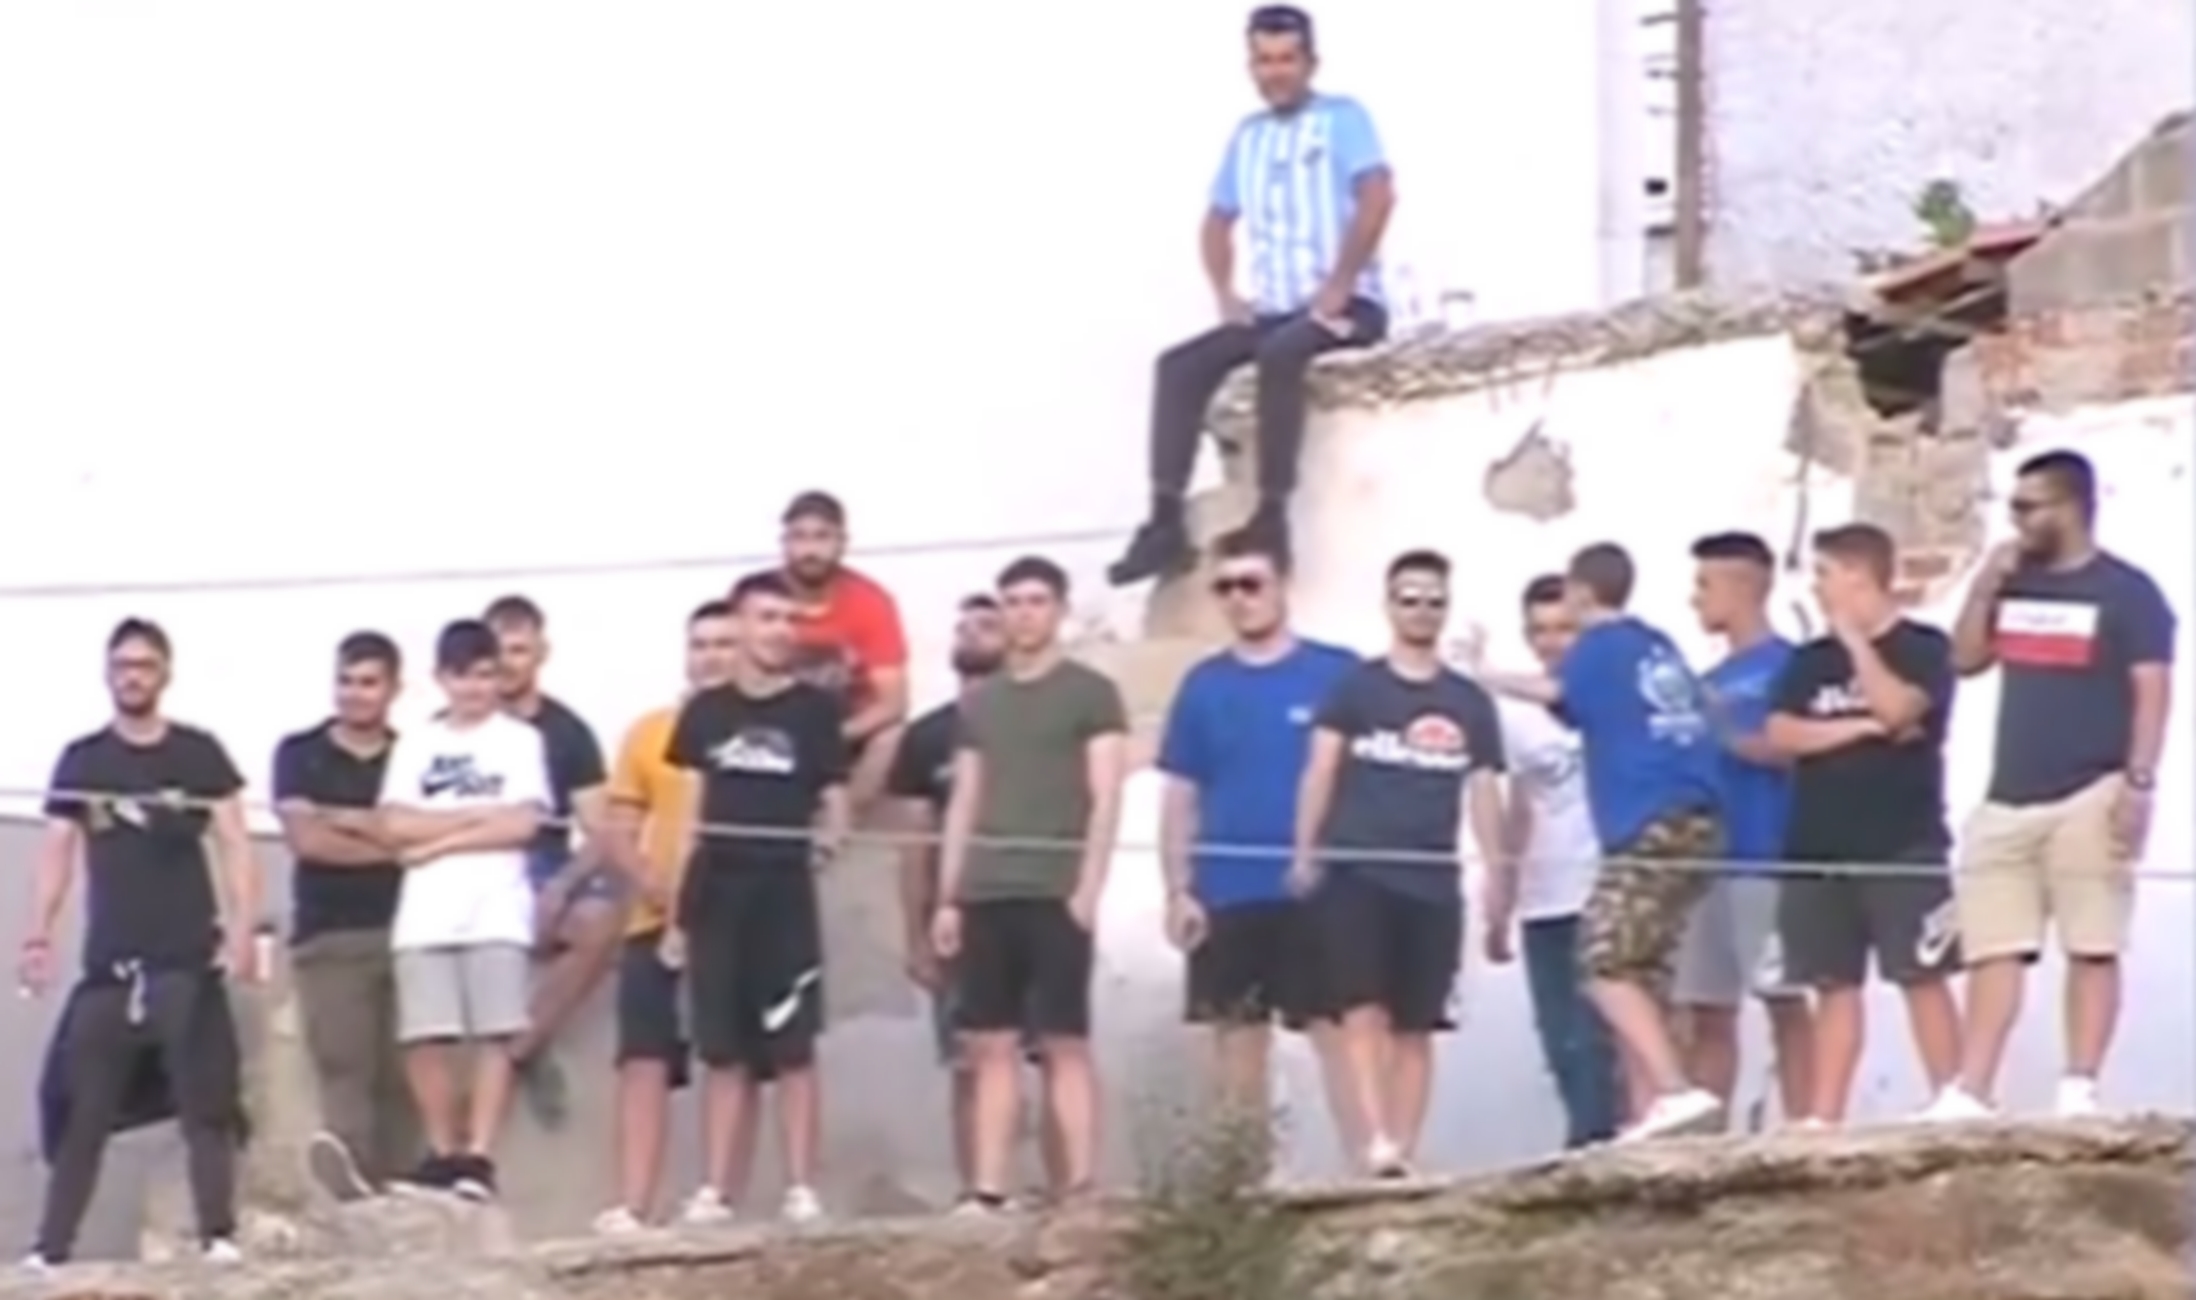 Superleague: Οπαδοί έκαναν “ντρίμπλα” στα μέτρα για τον κορονοϊό στη Λαμία (video)